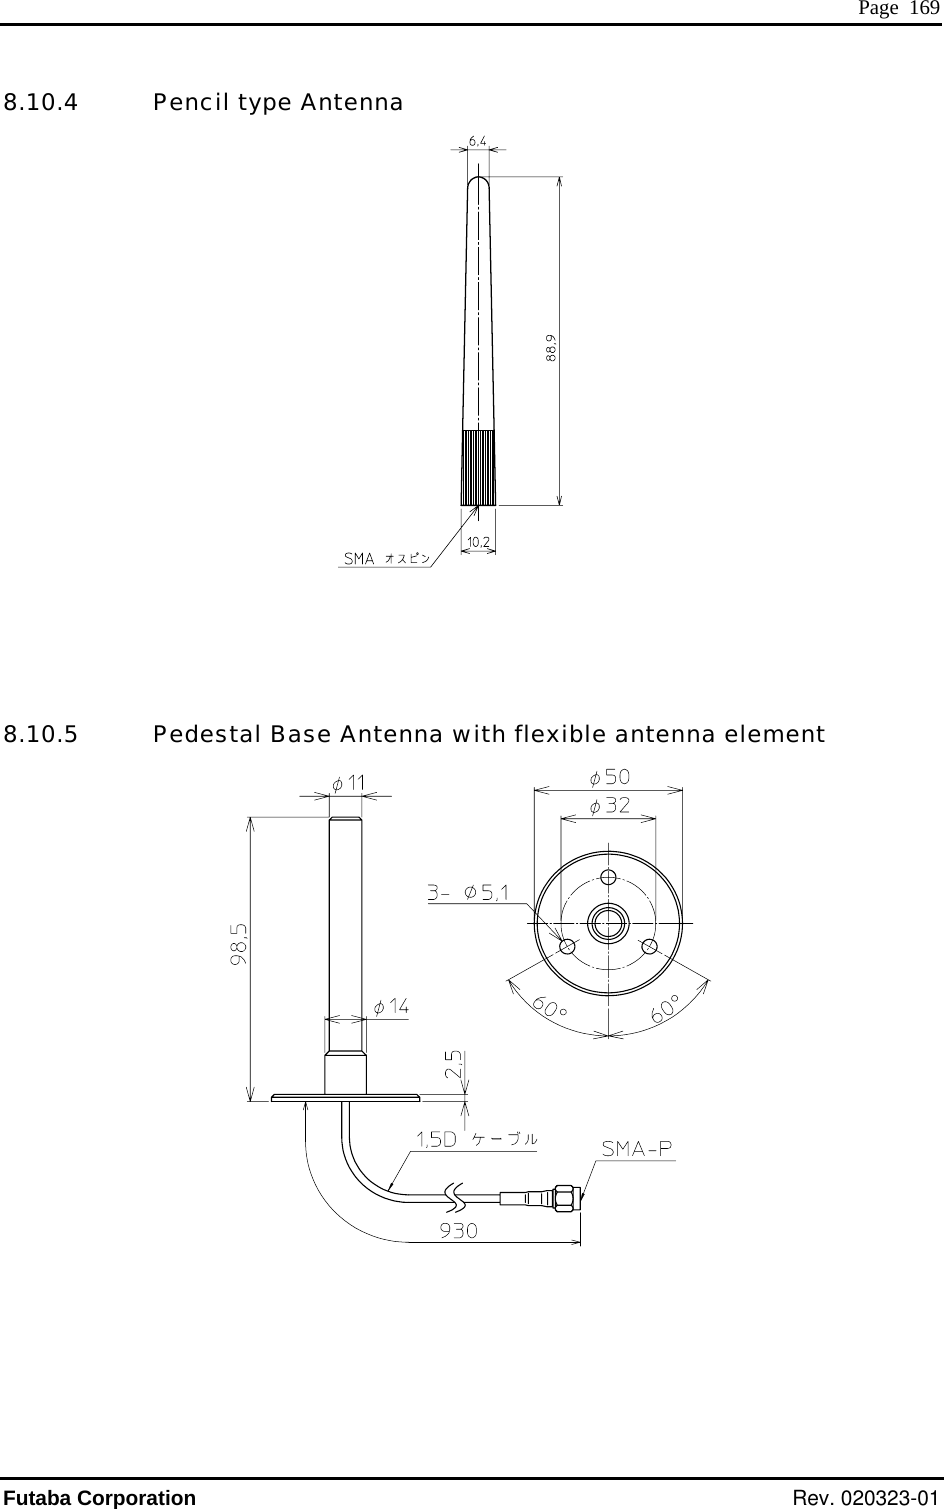  Page  169 8.10.4   Pencil type Antenna      8.10.5   Pedestal Base Antenna with flexible antenna element       Futaba Corporation Rev. 020323-01 